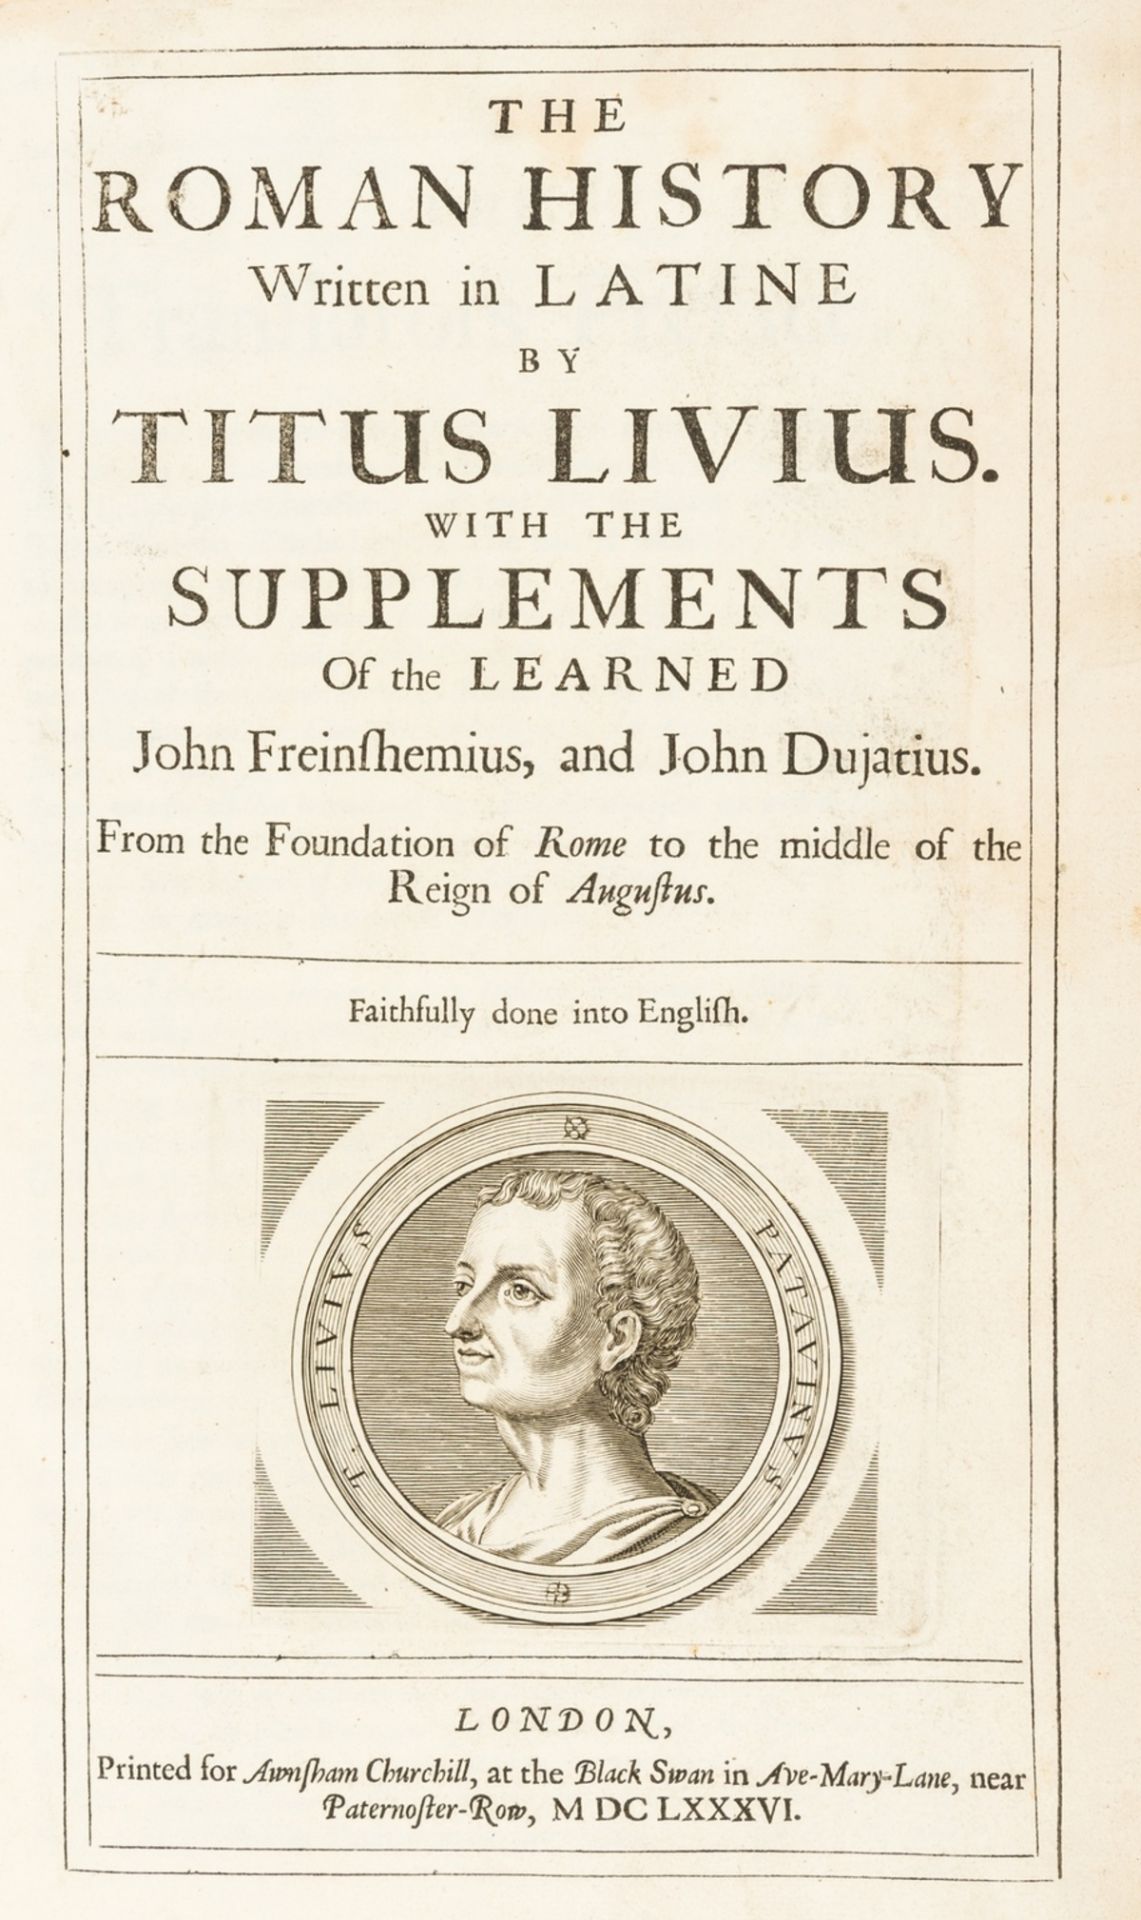 Livius (Titus) The Roman History Written in Latine, for Awnsham Churchill, 1686.